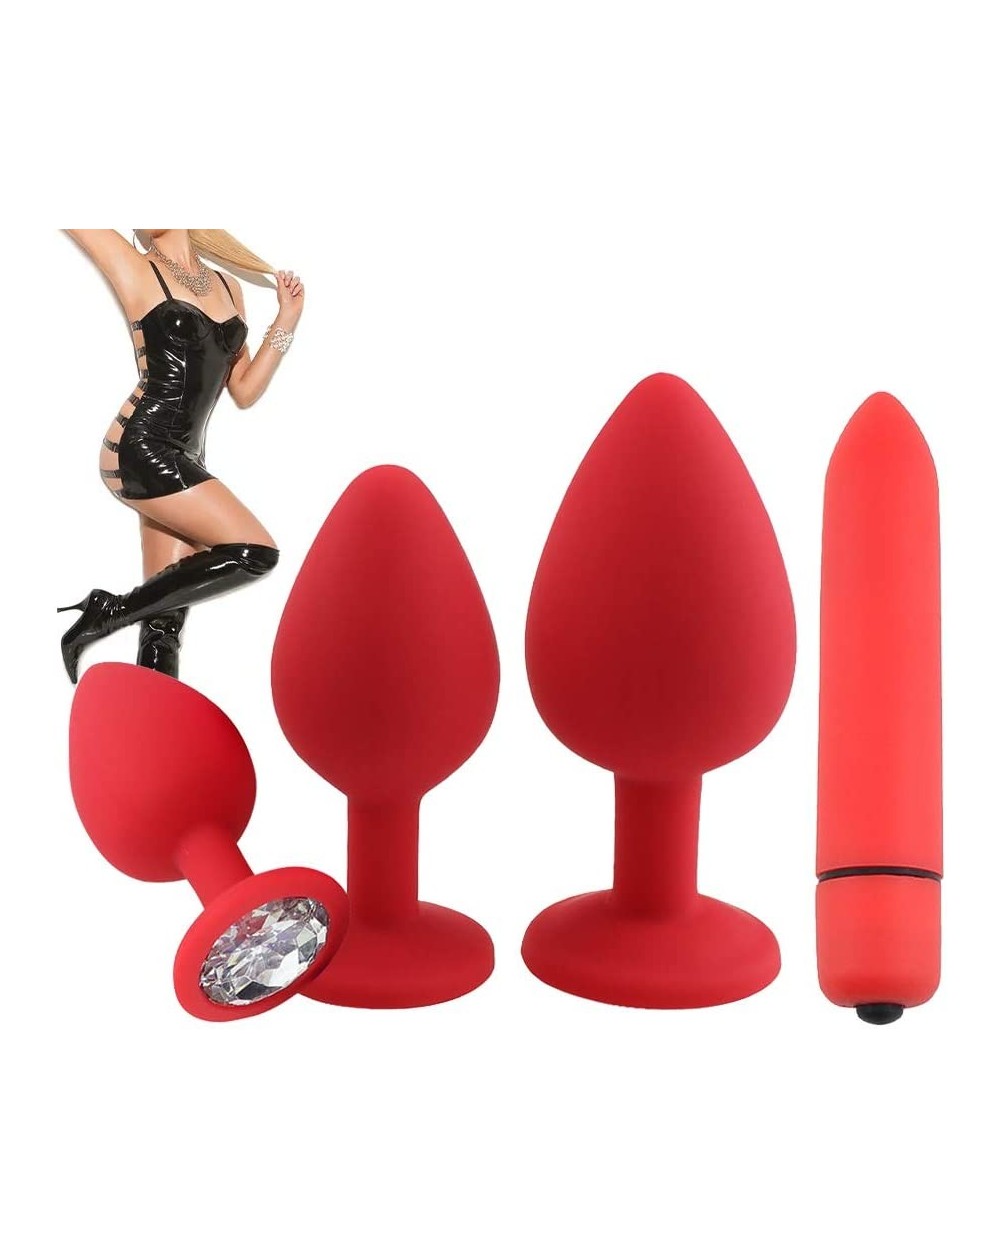 Adult Novelty Soft Medical Silicone Trainer Kit for Women-Anales Pugs Beginner Set 4Pcs/Set 4set red - 4set Red - C619HGCNH0R...